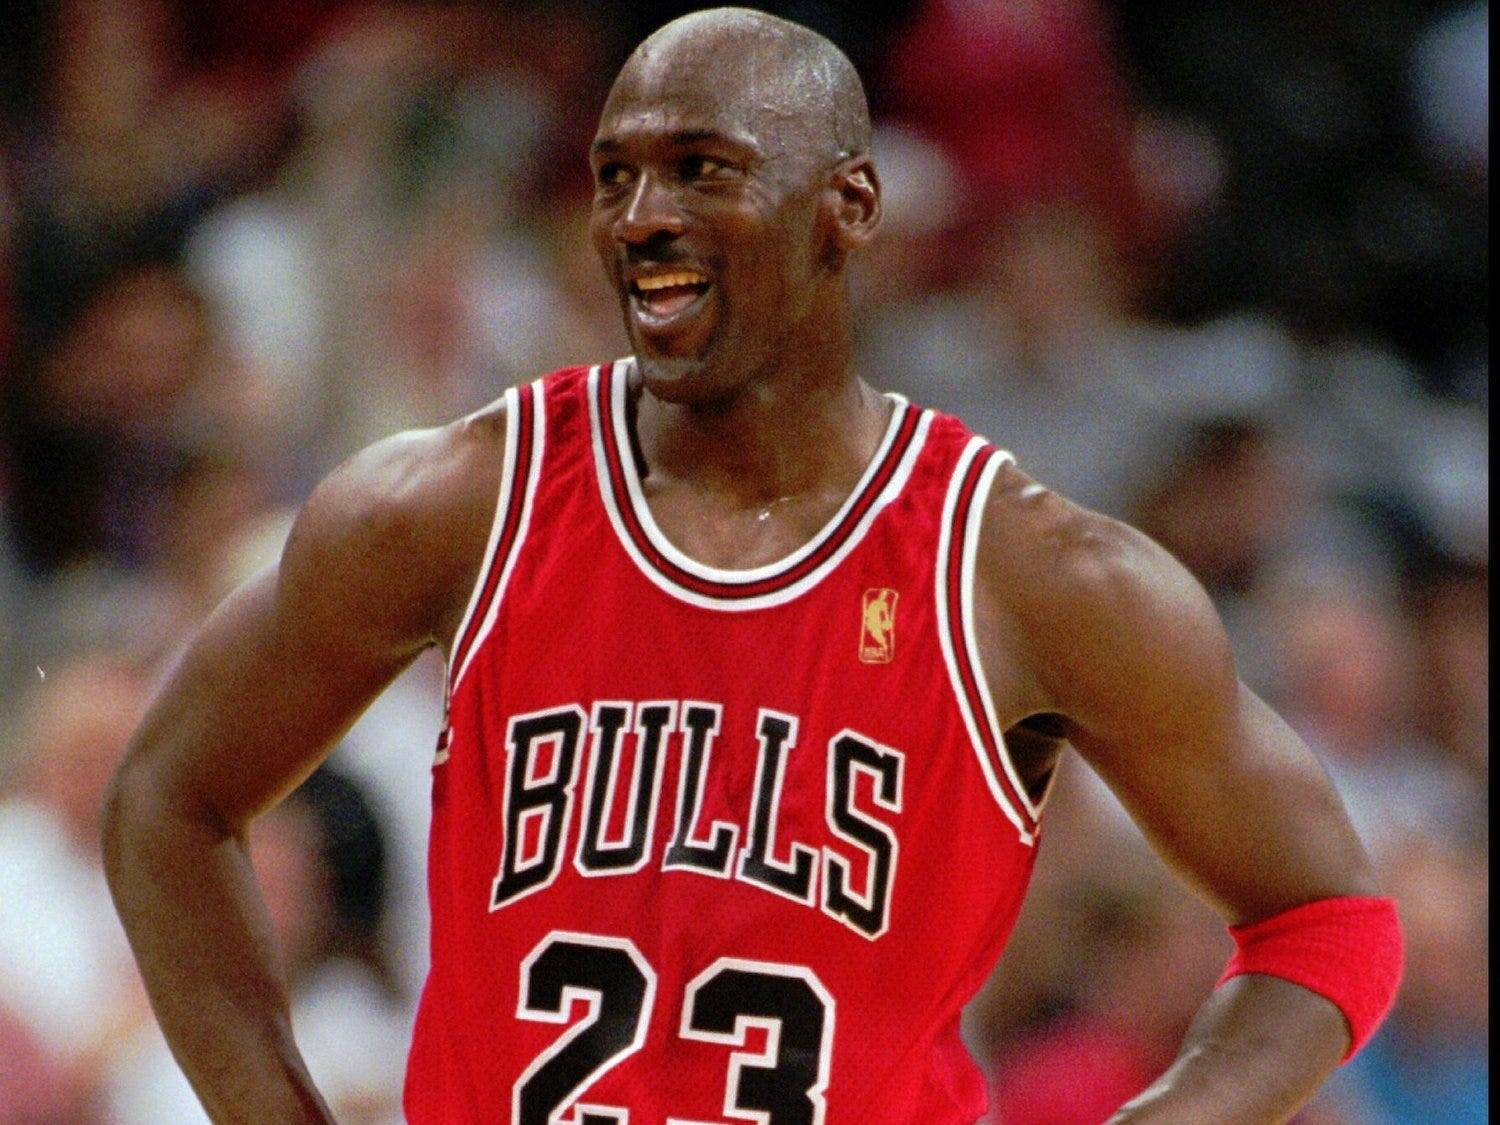 Michael Jordan called his iconic 63 